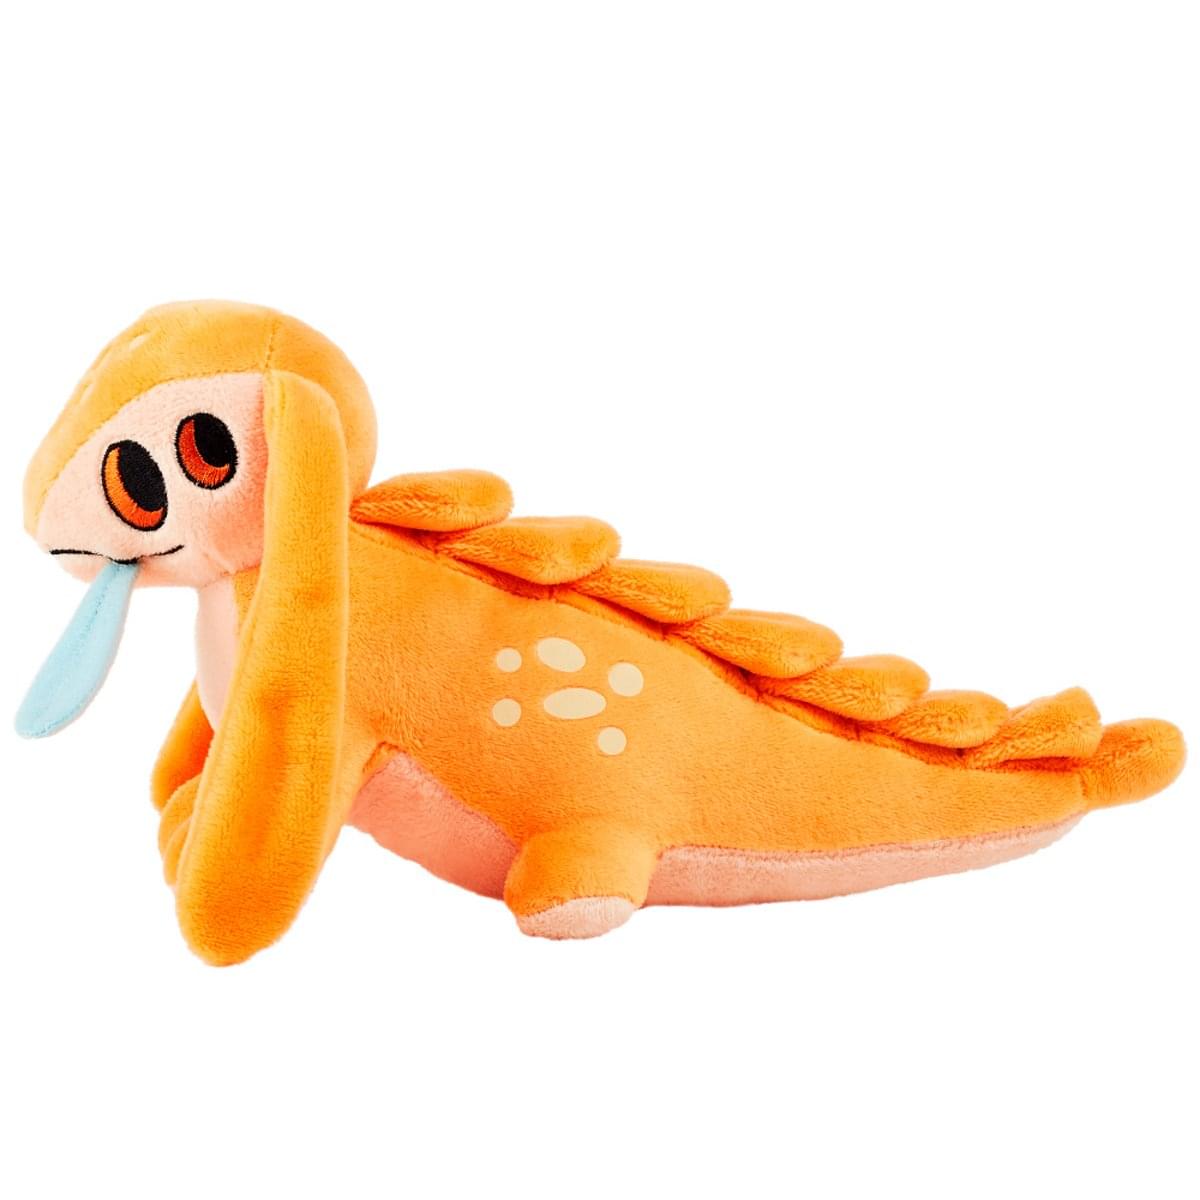 Satisfactory Lizard Doggo 9 Inch Character Plush